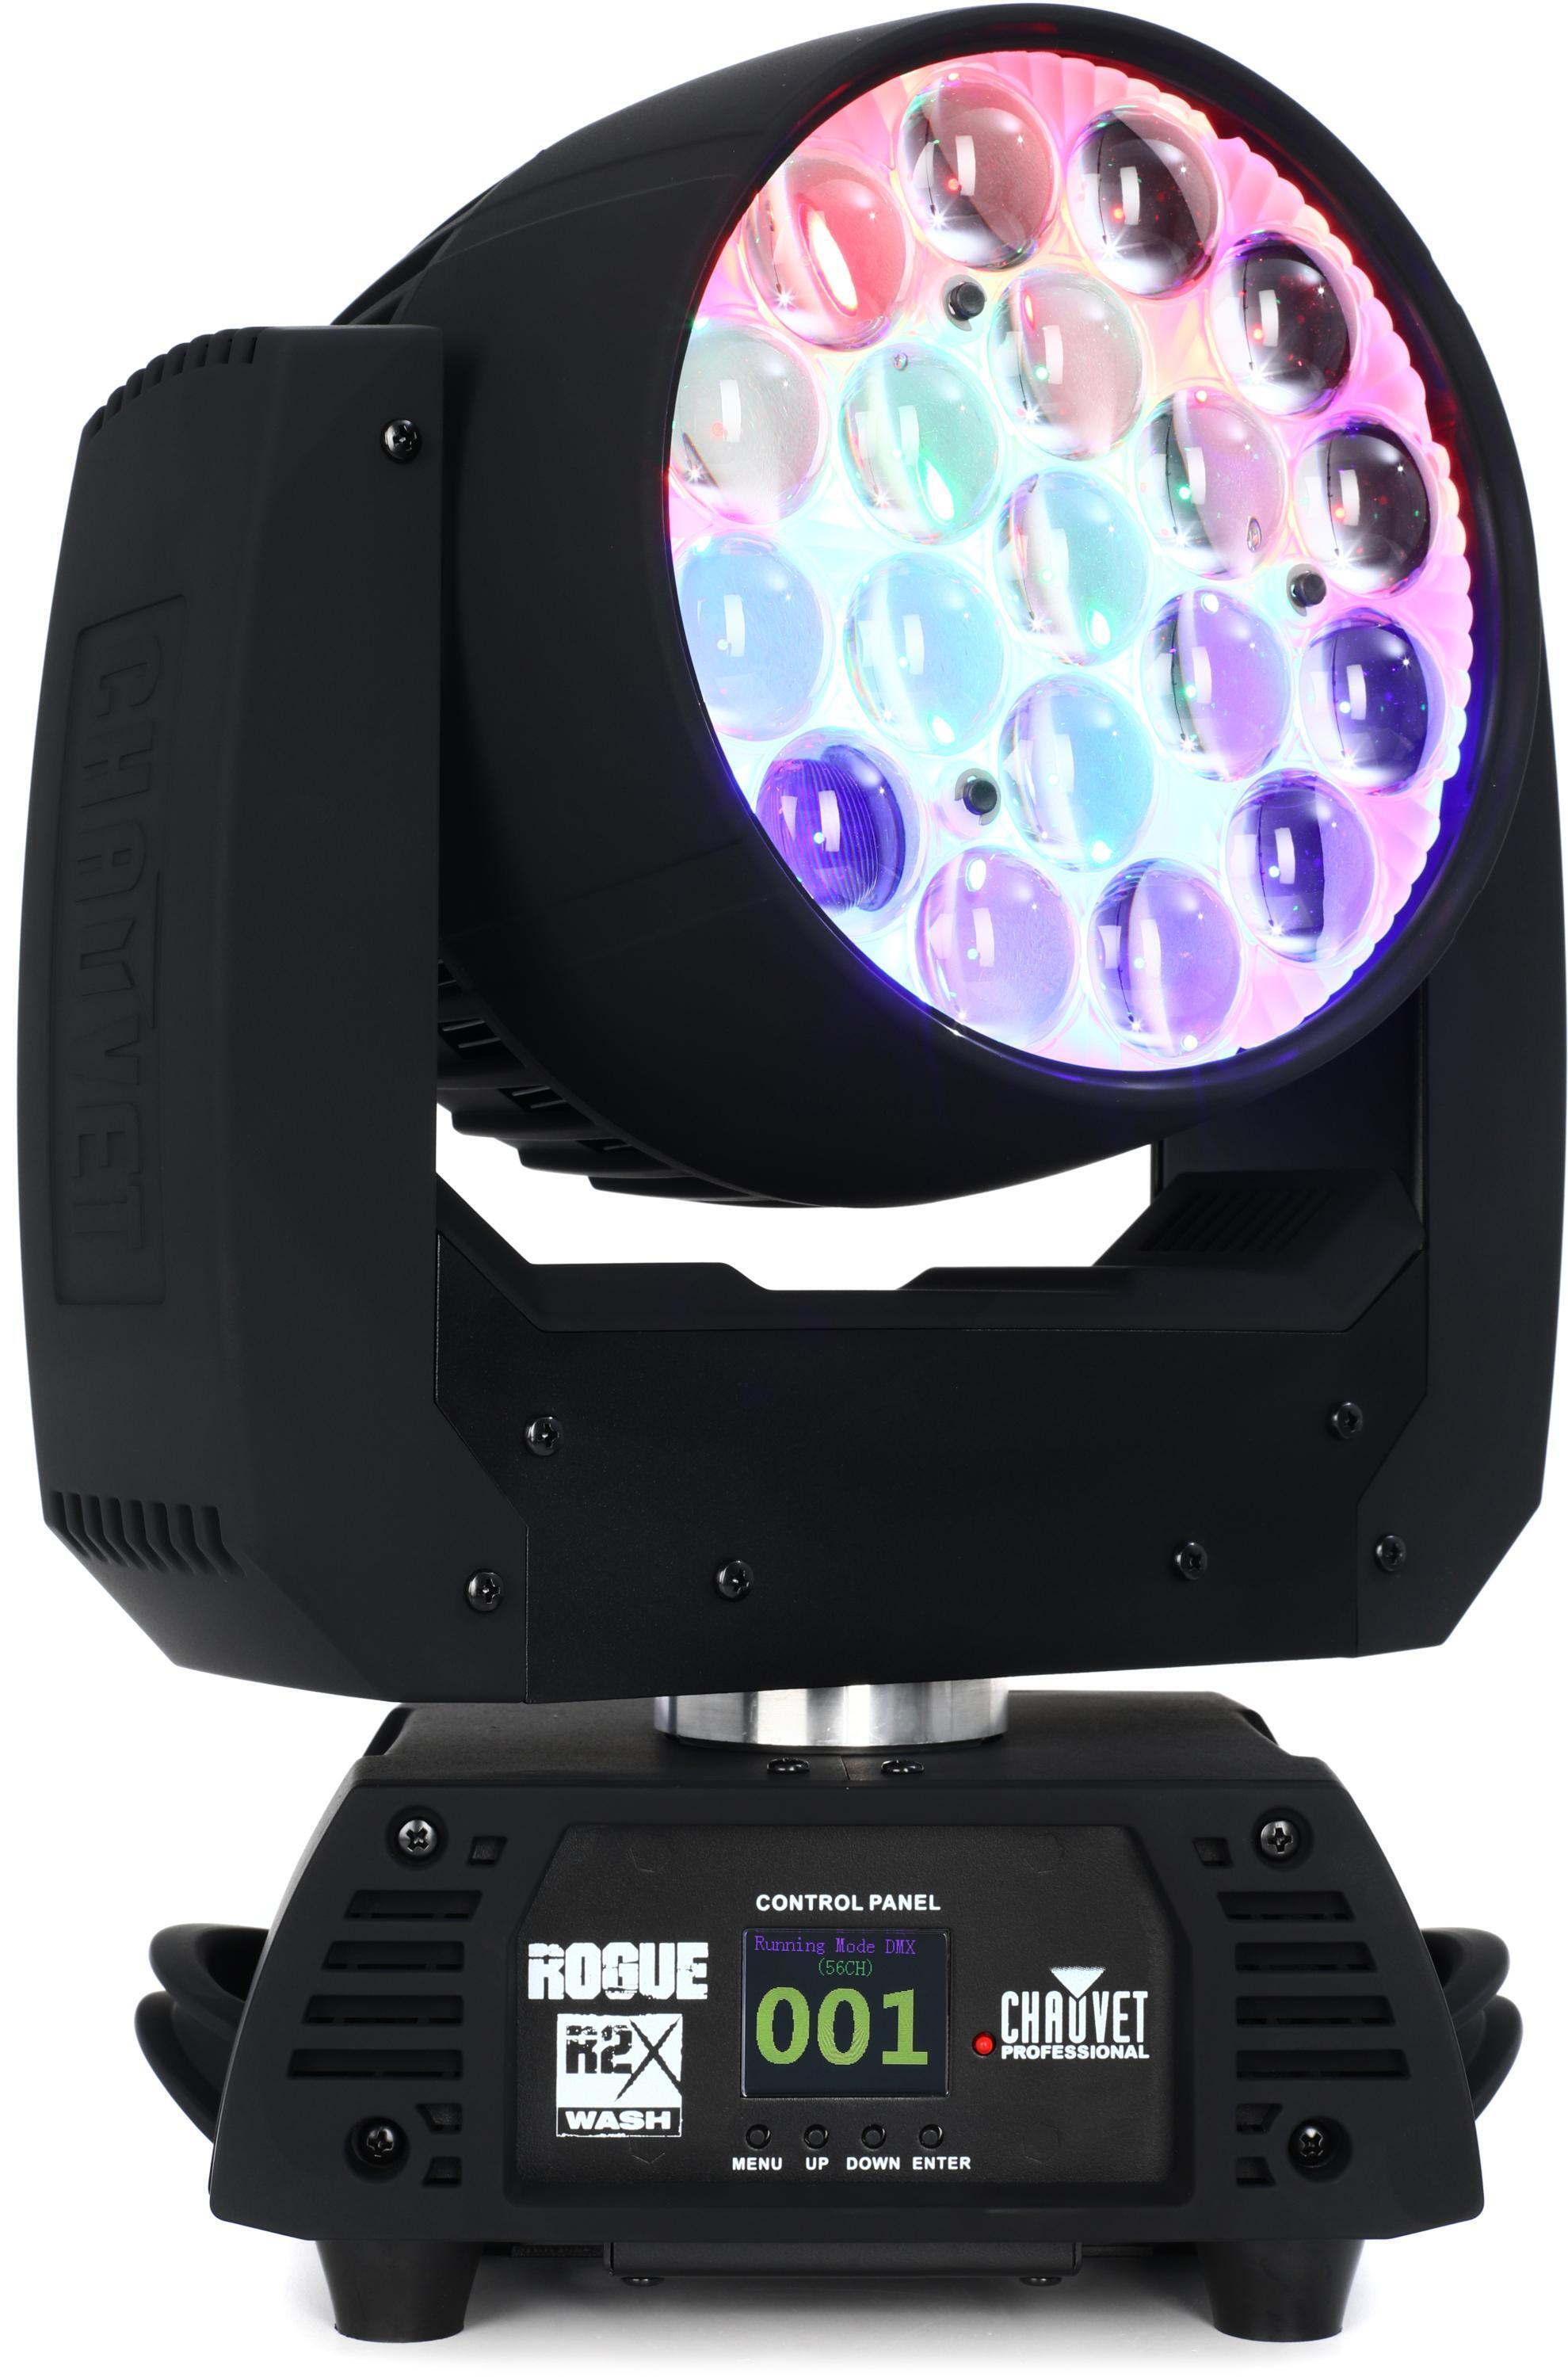 Bundled Item: Chauvet Pro Rogue R2X Wash RGBW LED Moving Head